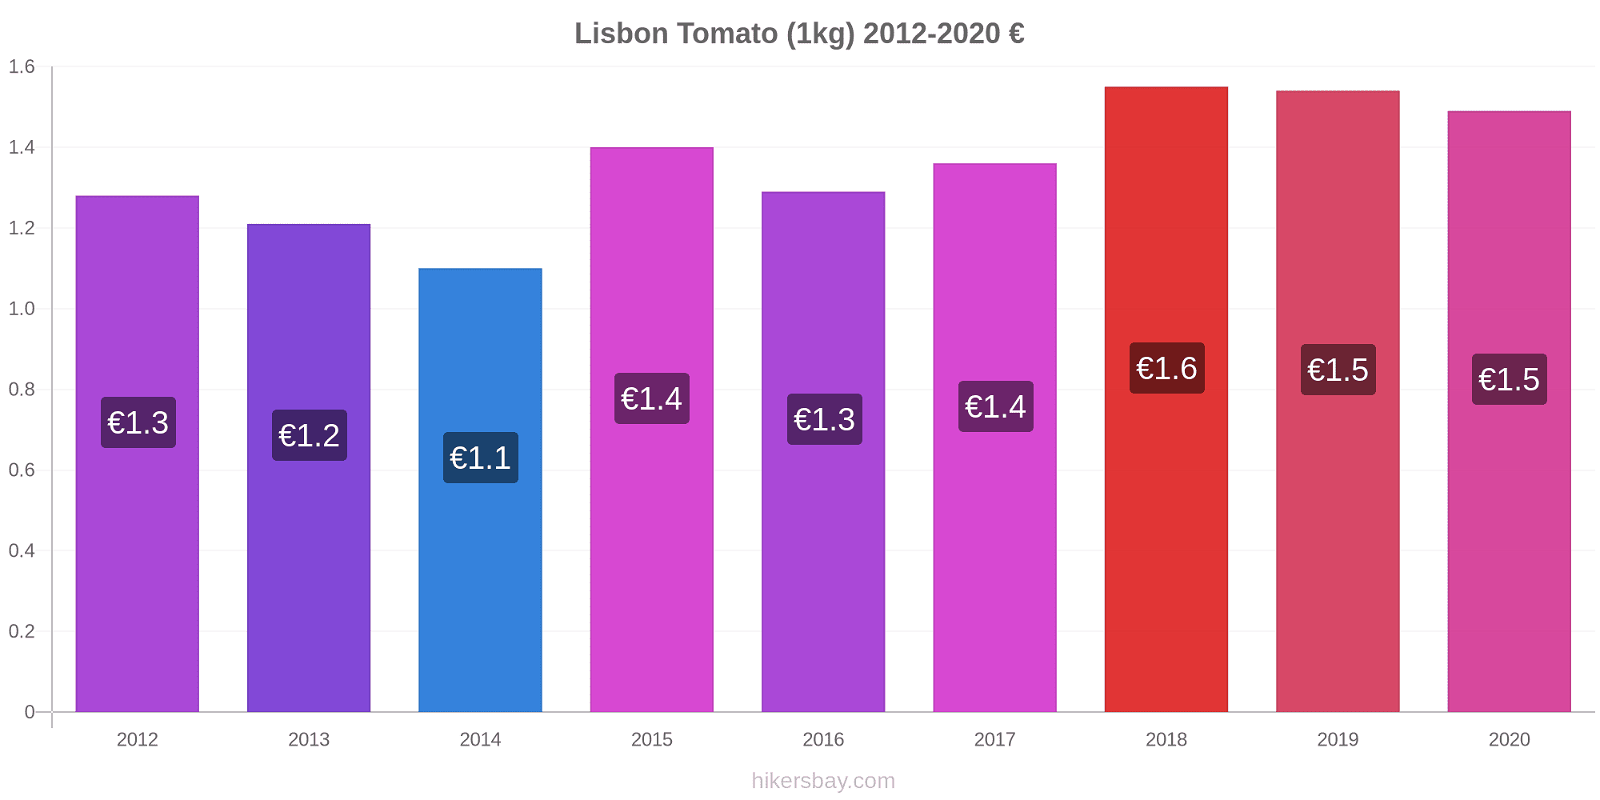 Lisbon price changes Tomato (1kg) hikersbay.com